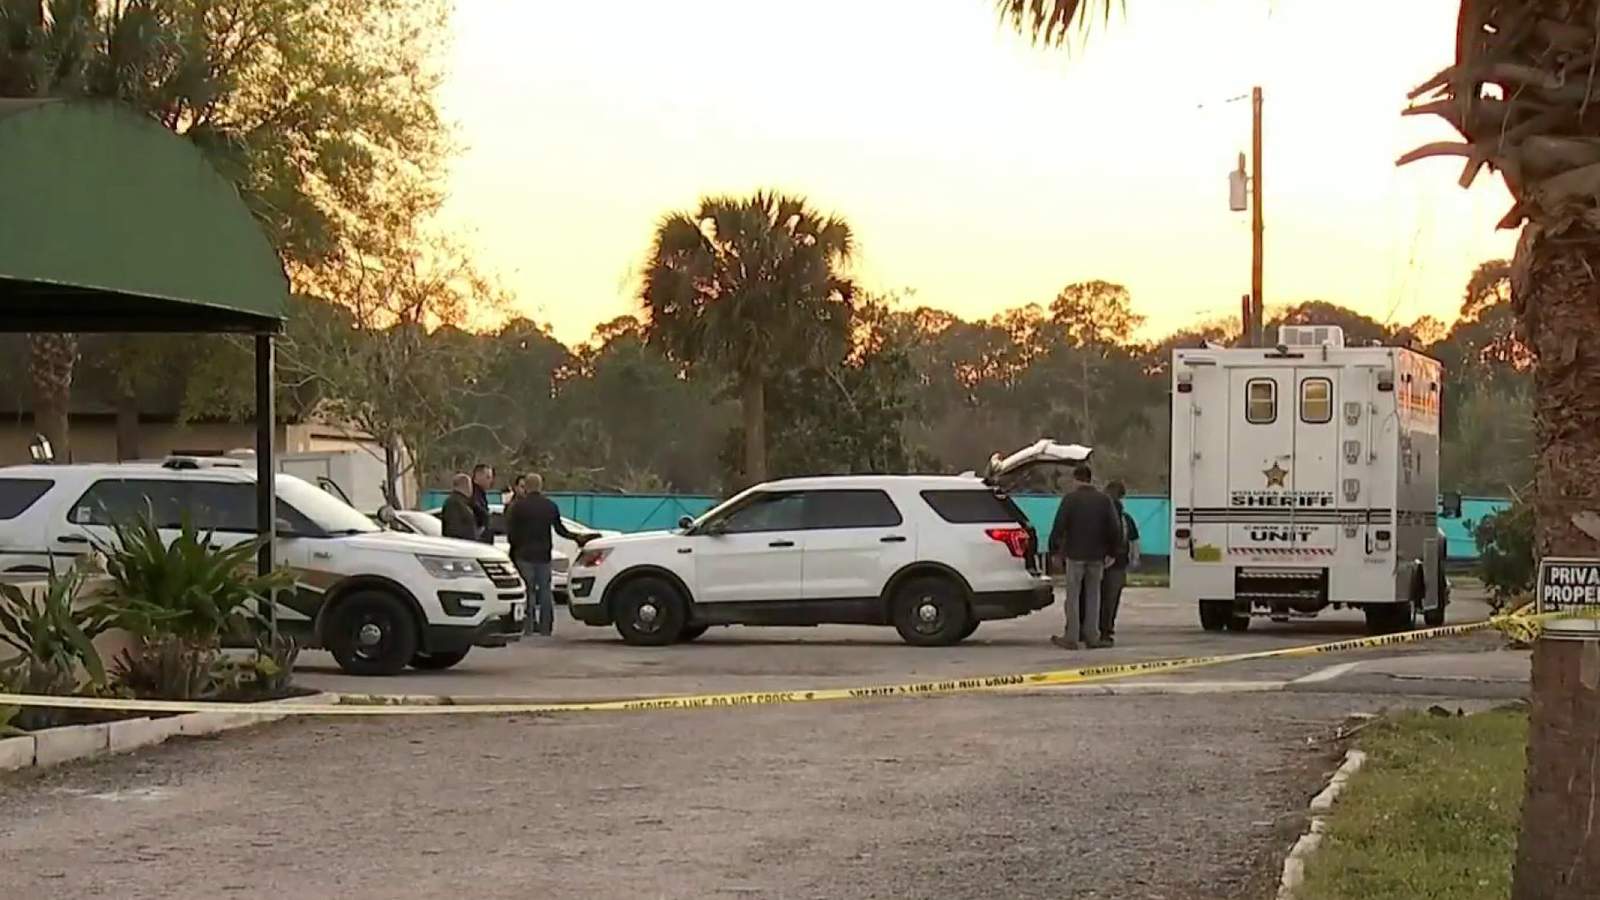 Sex offender found dead at Daytona Beach motel in suspected homicide, deputies say